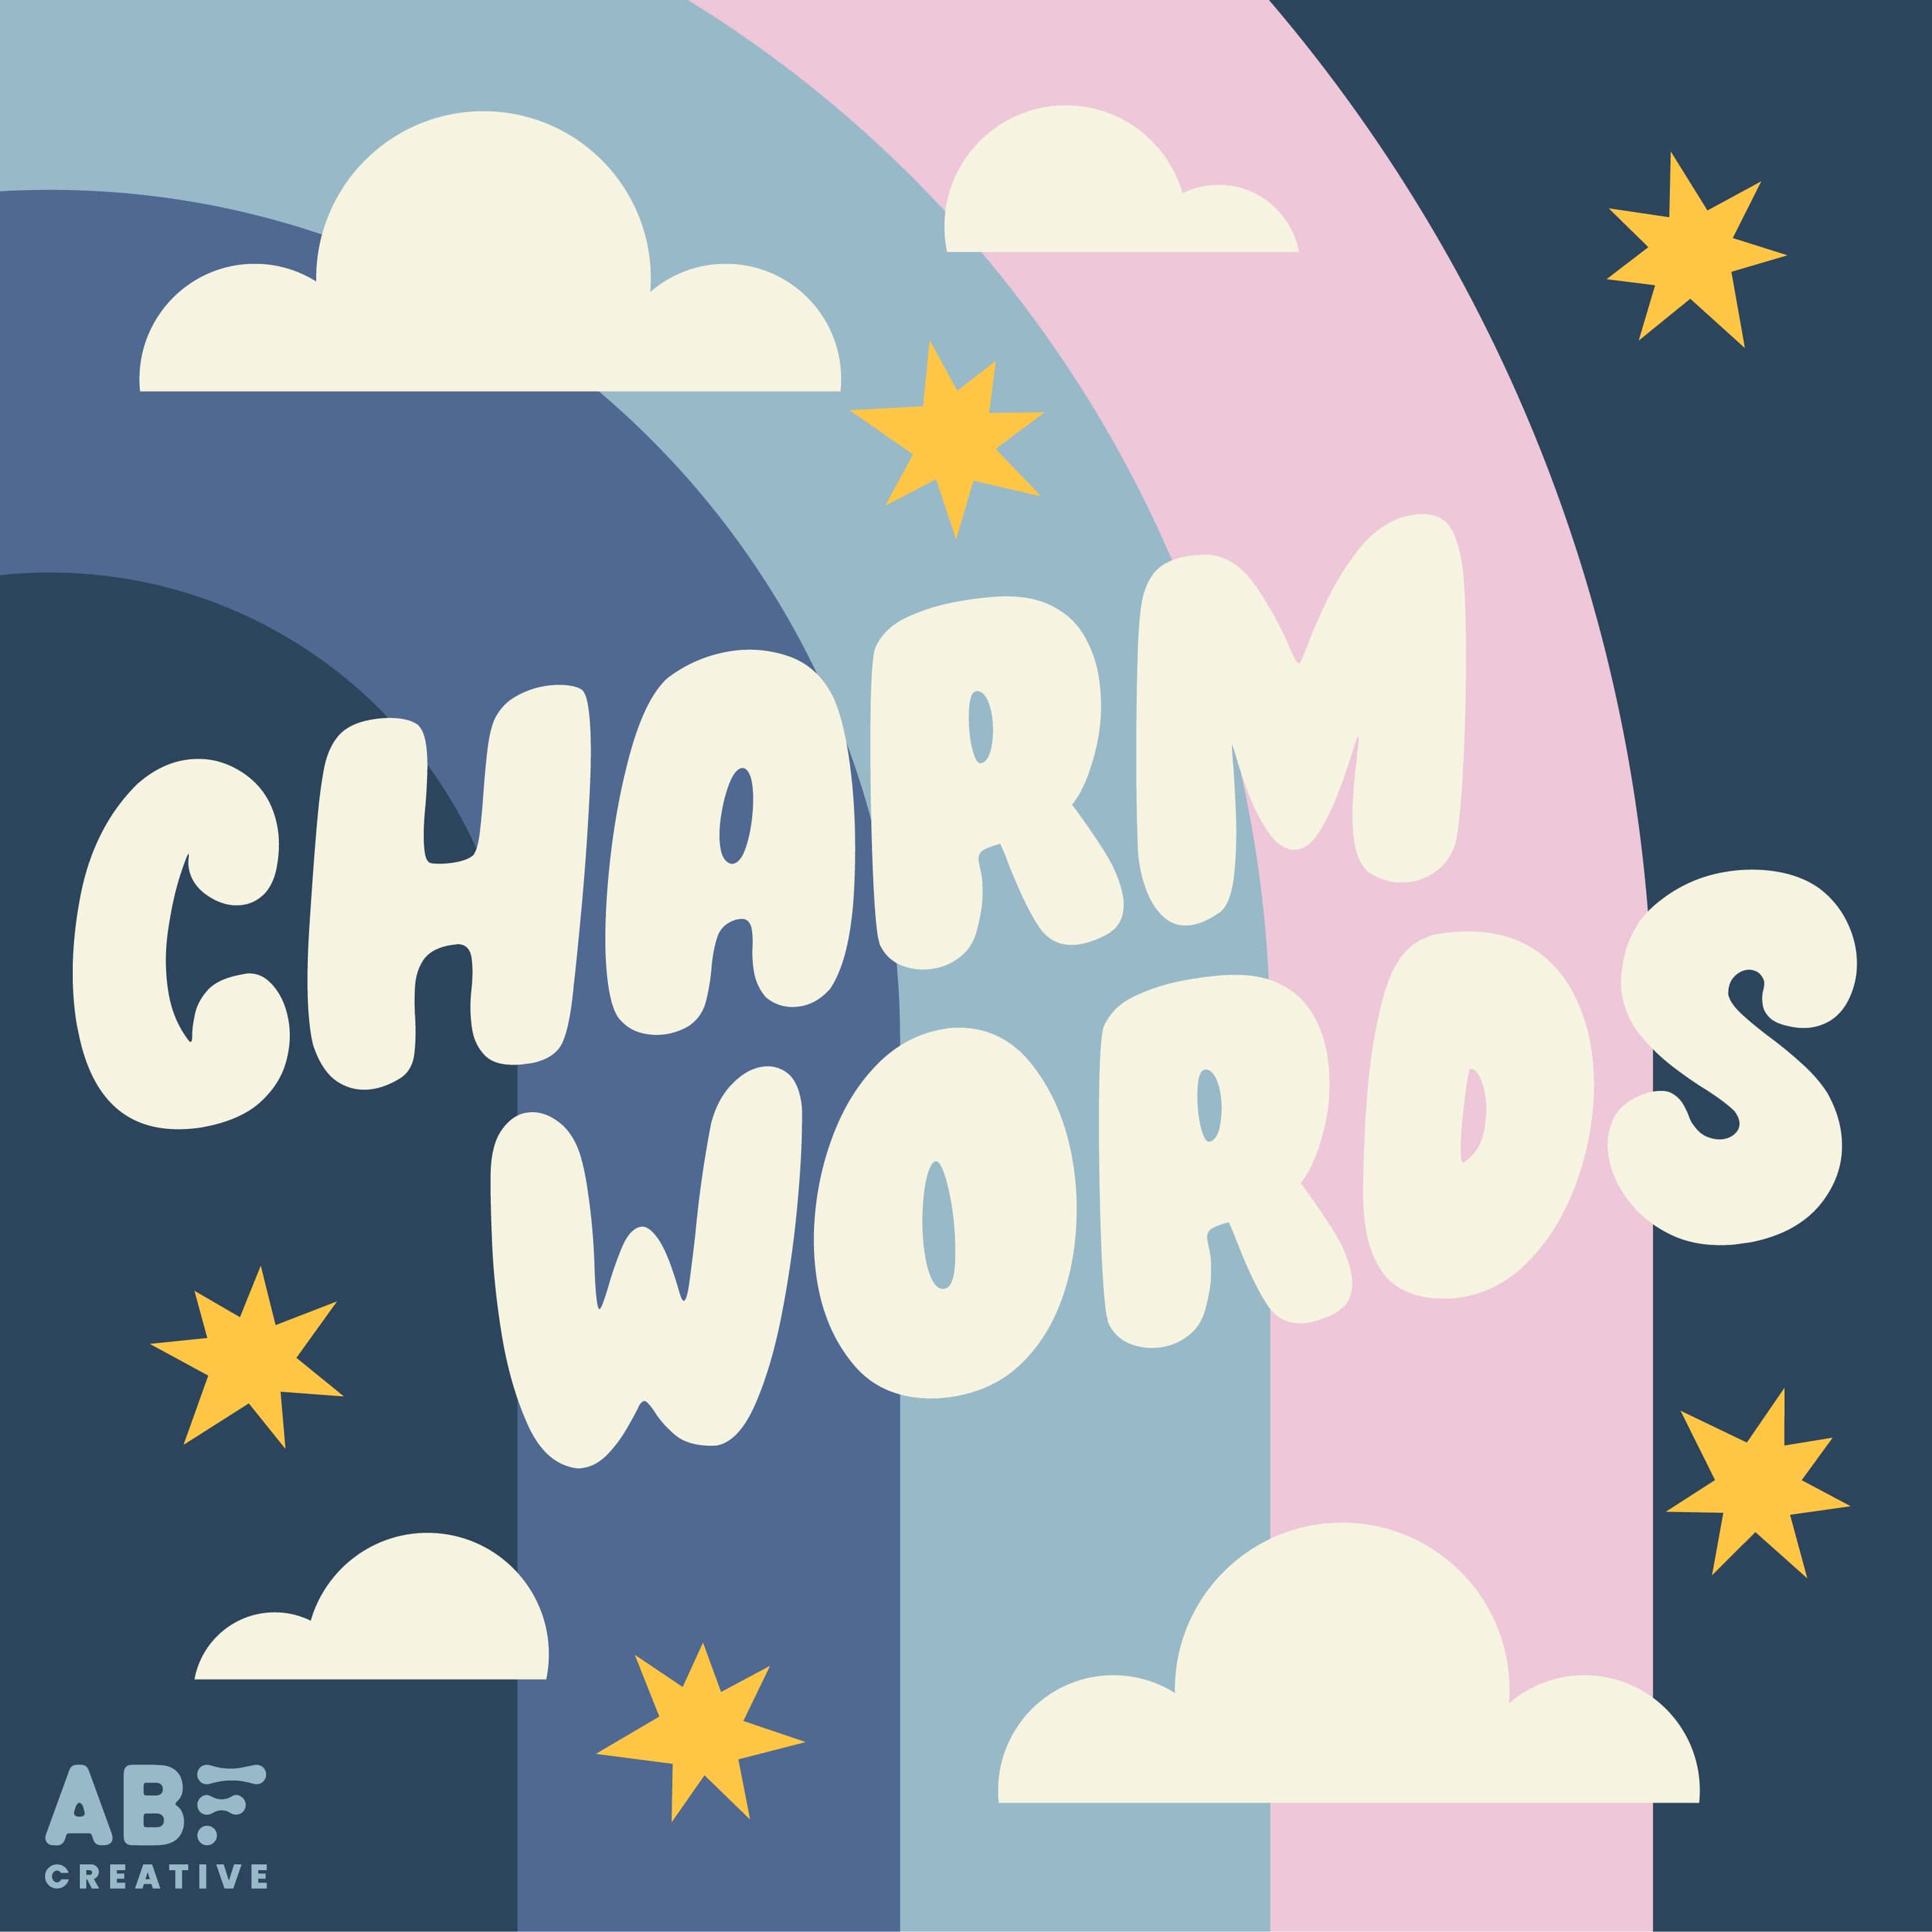 ABF Creative Ups Mindfulness Content with Spanish-Language Podcast Charm Words Español